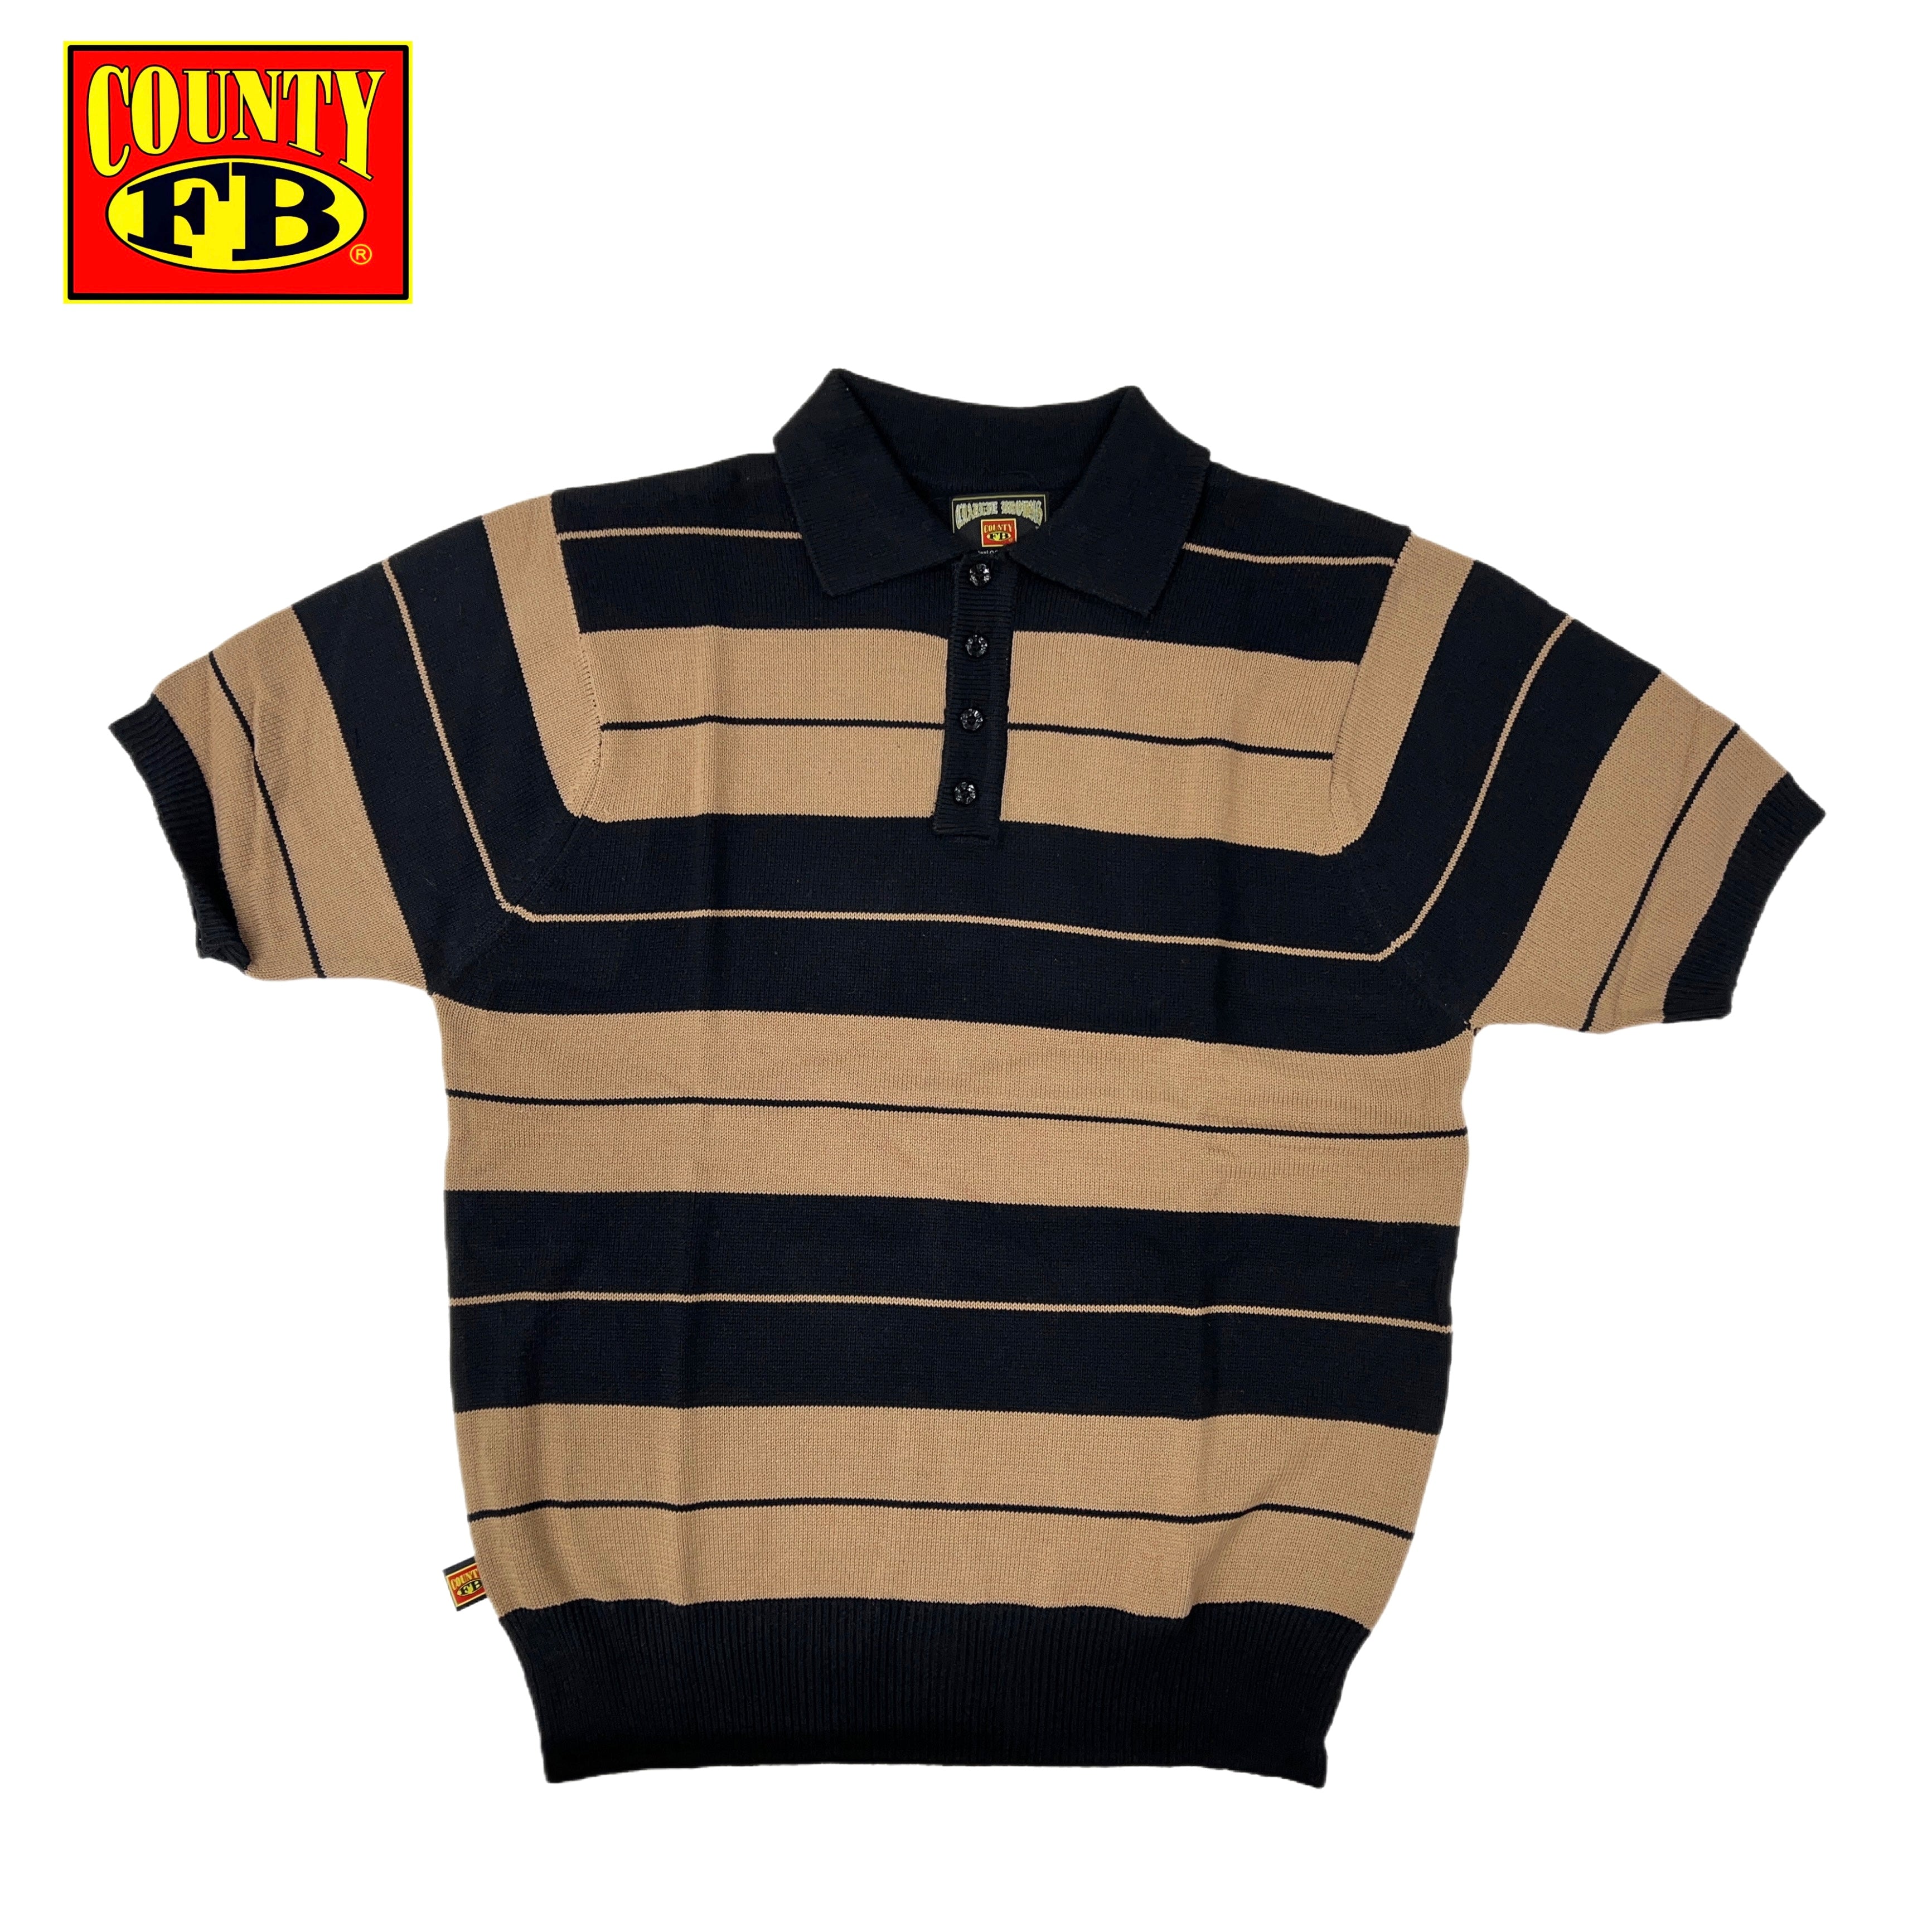 FB County Charlie Brown Shirt - Brown/Tan & Black/Tan